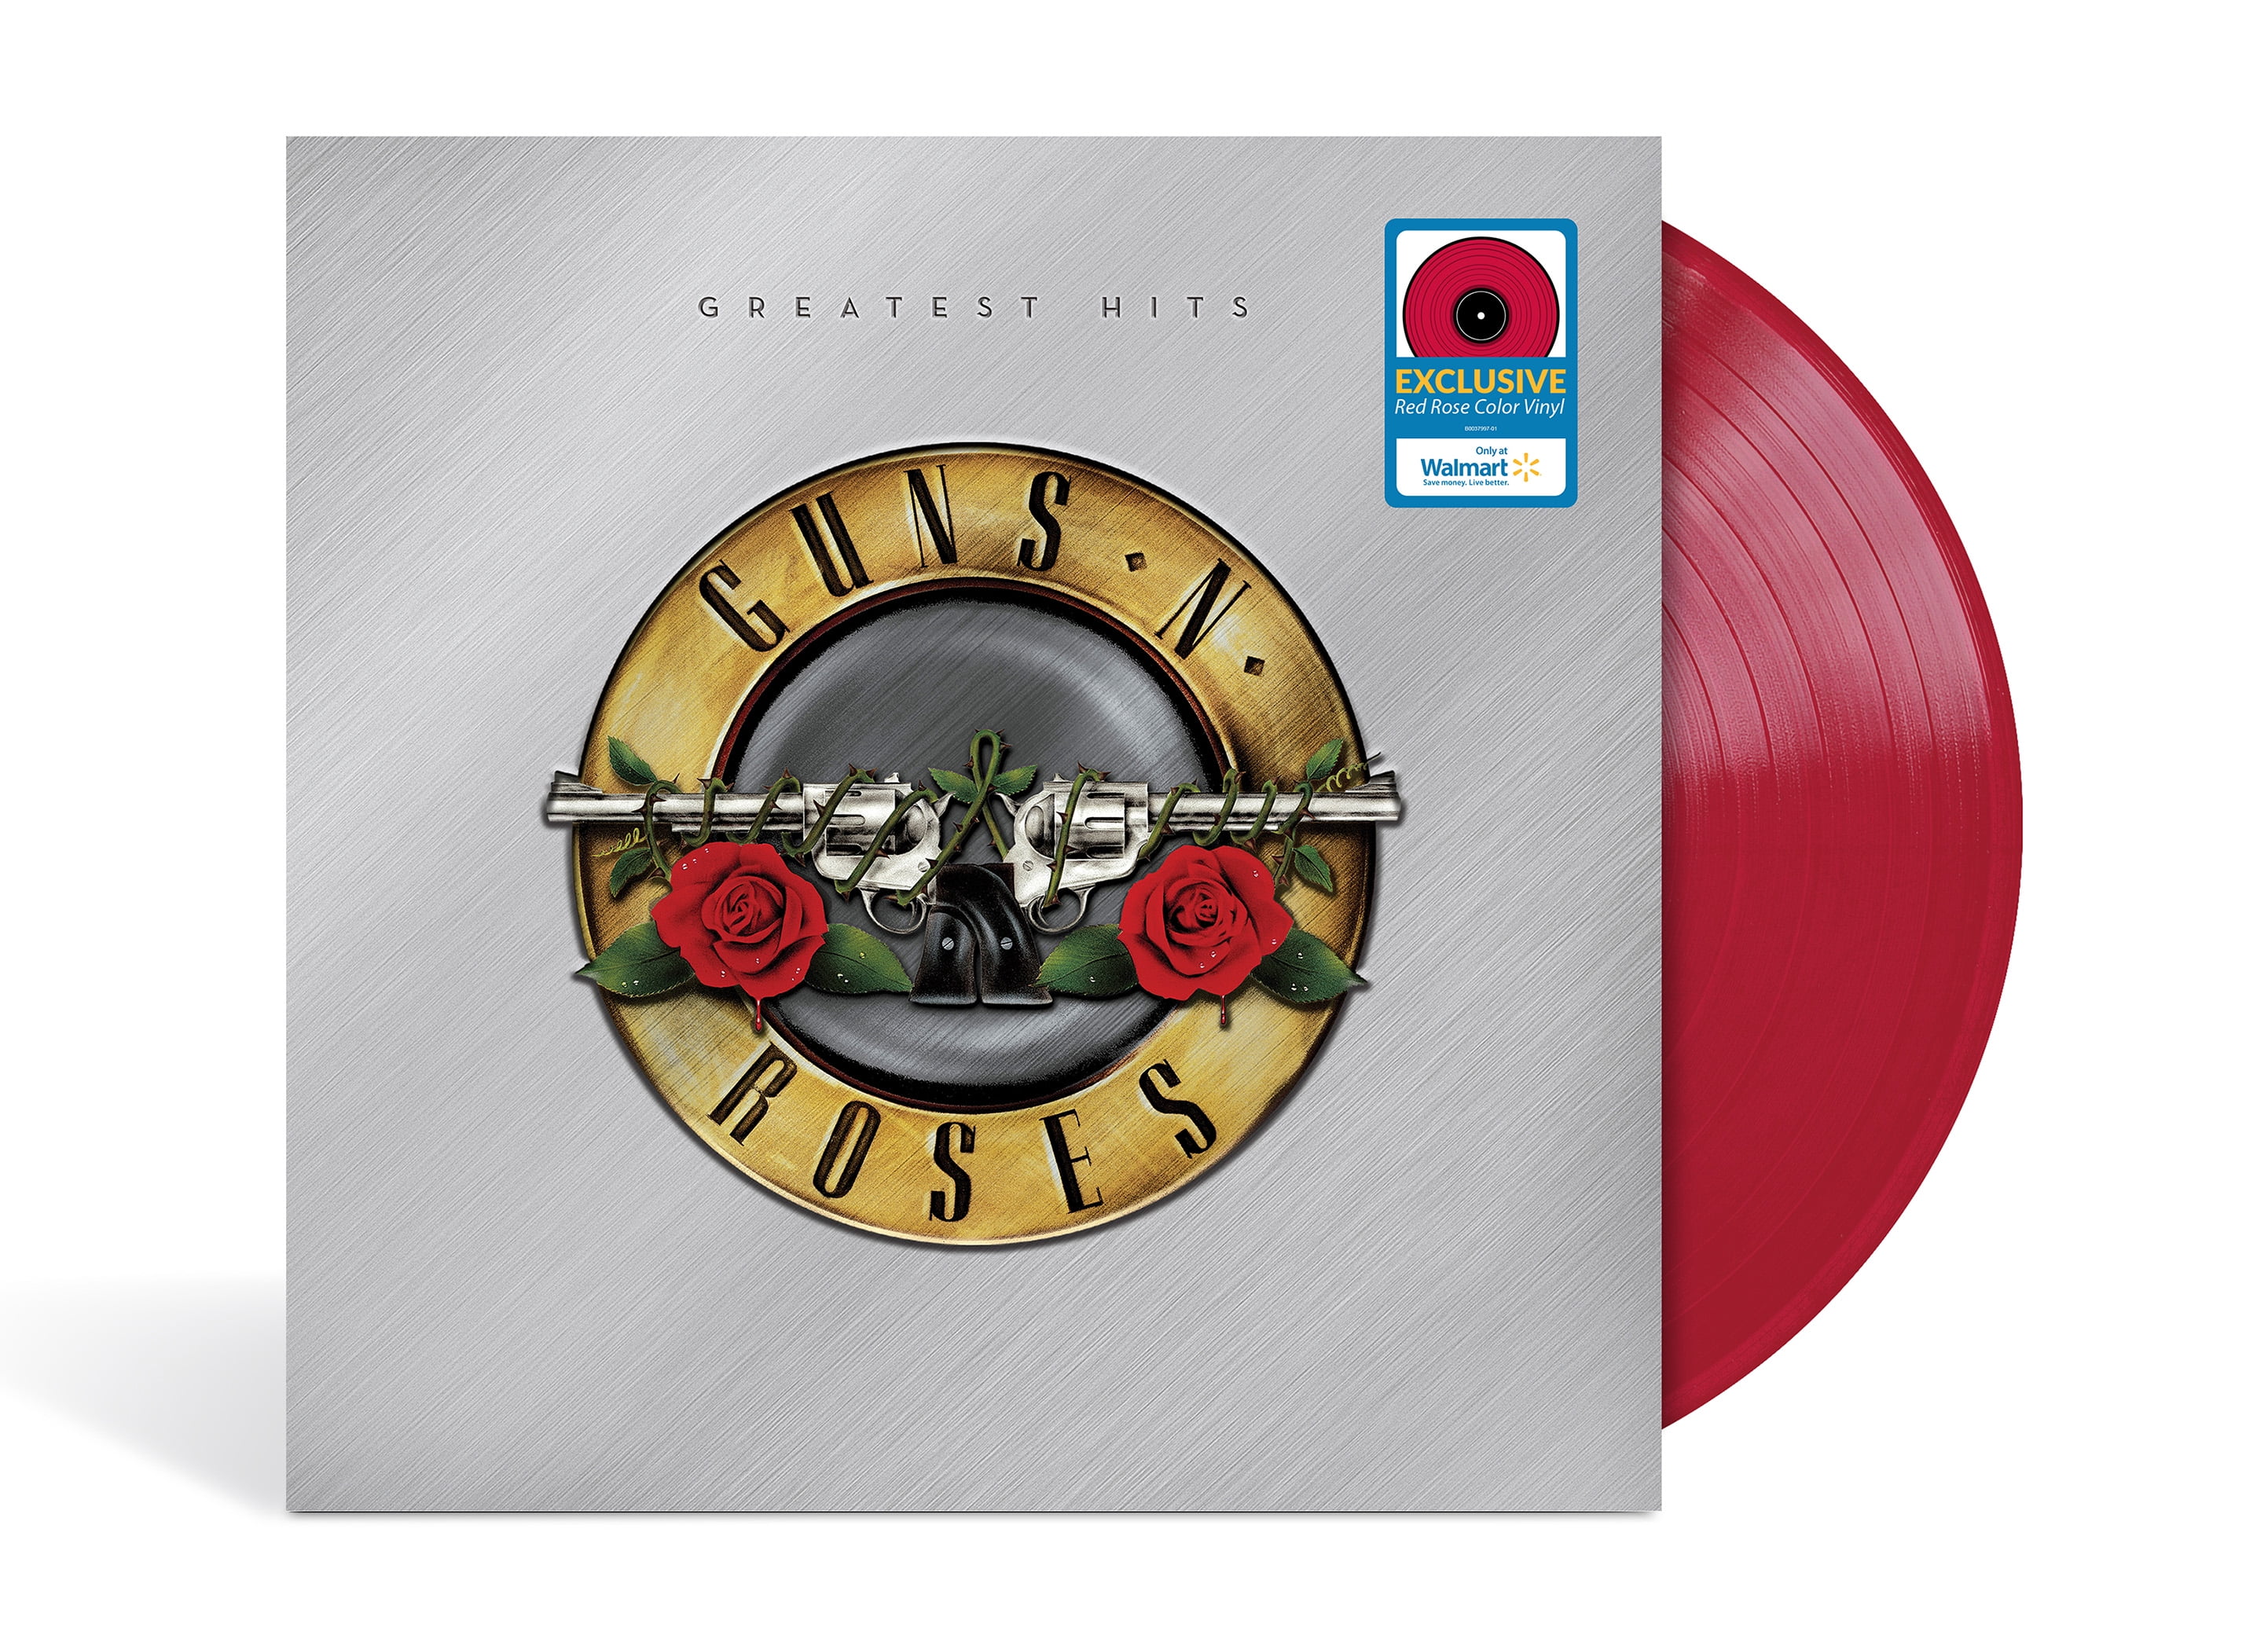 Guns N Roses - Greatest Hits (Walmart Exclusive Red Rose Vinyl) - Rock LP